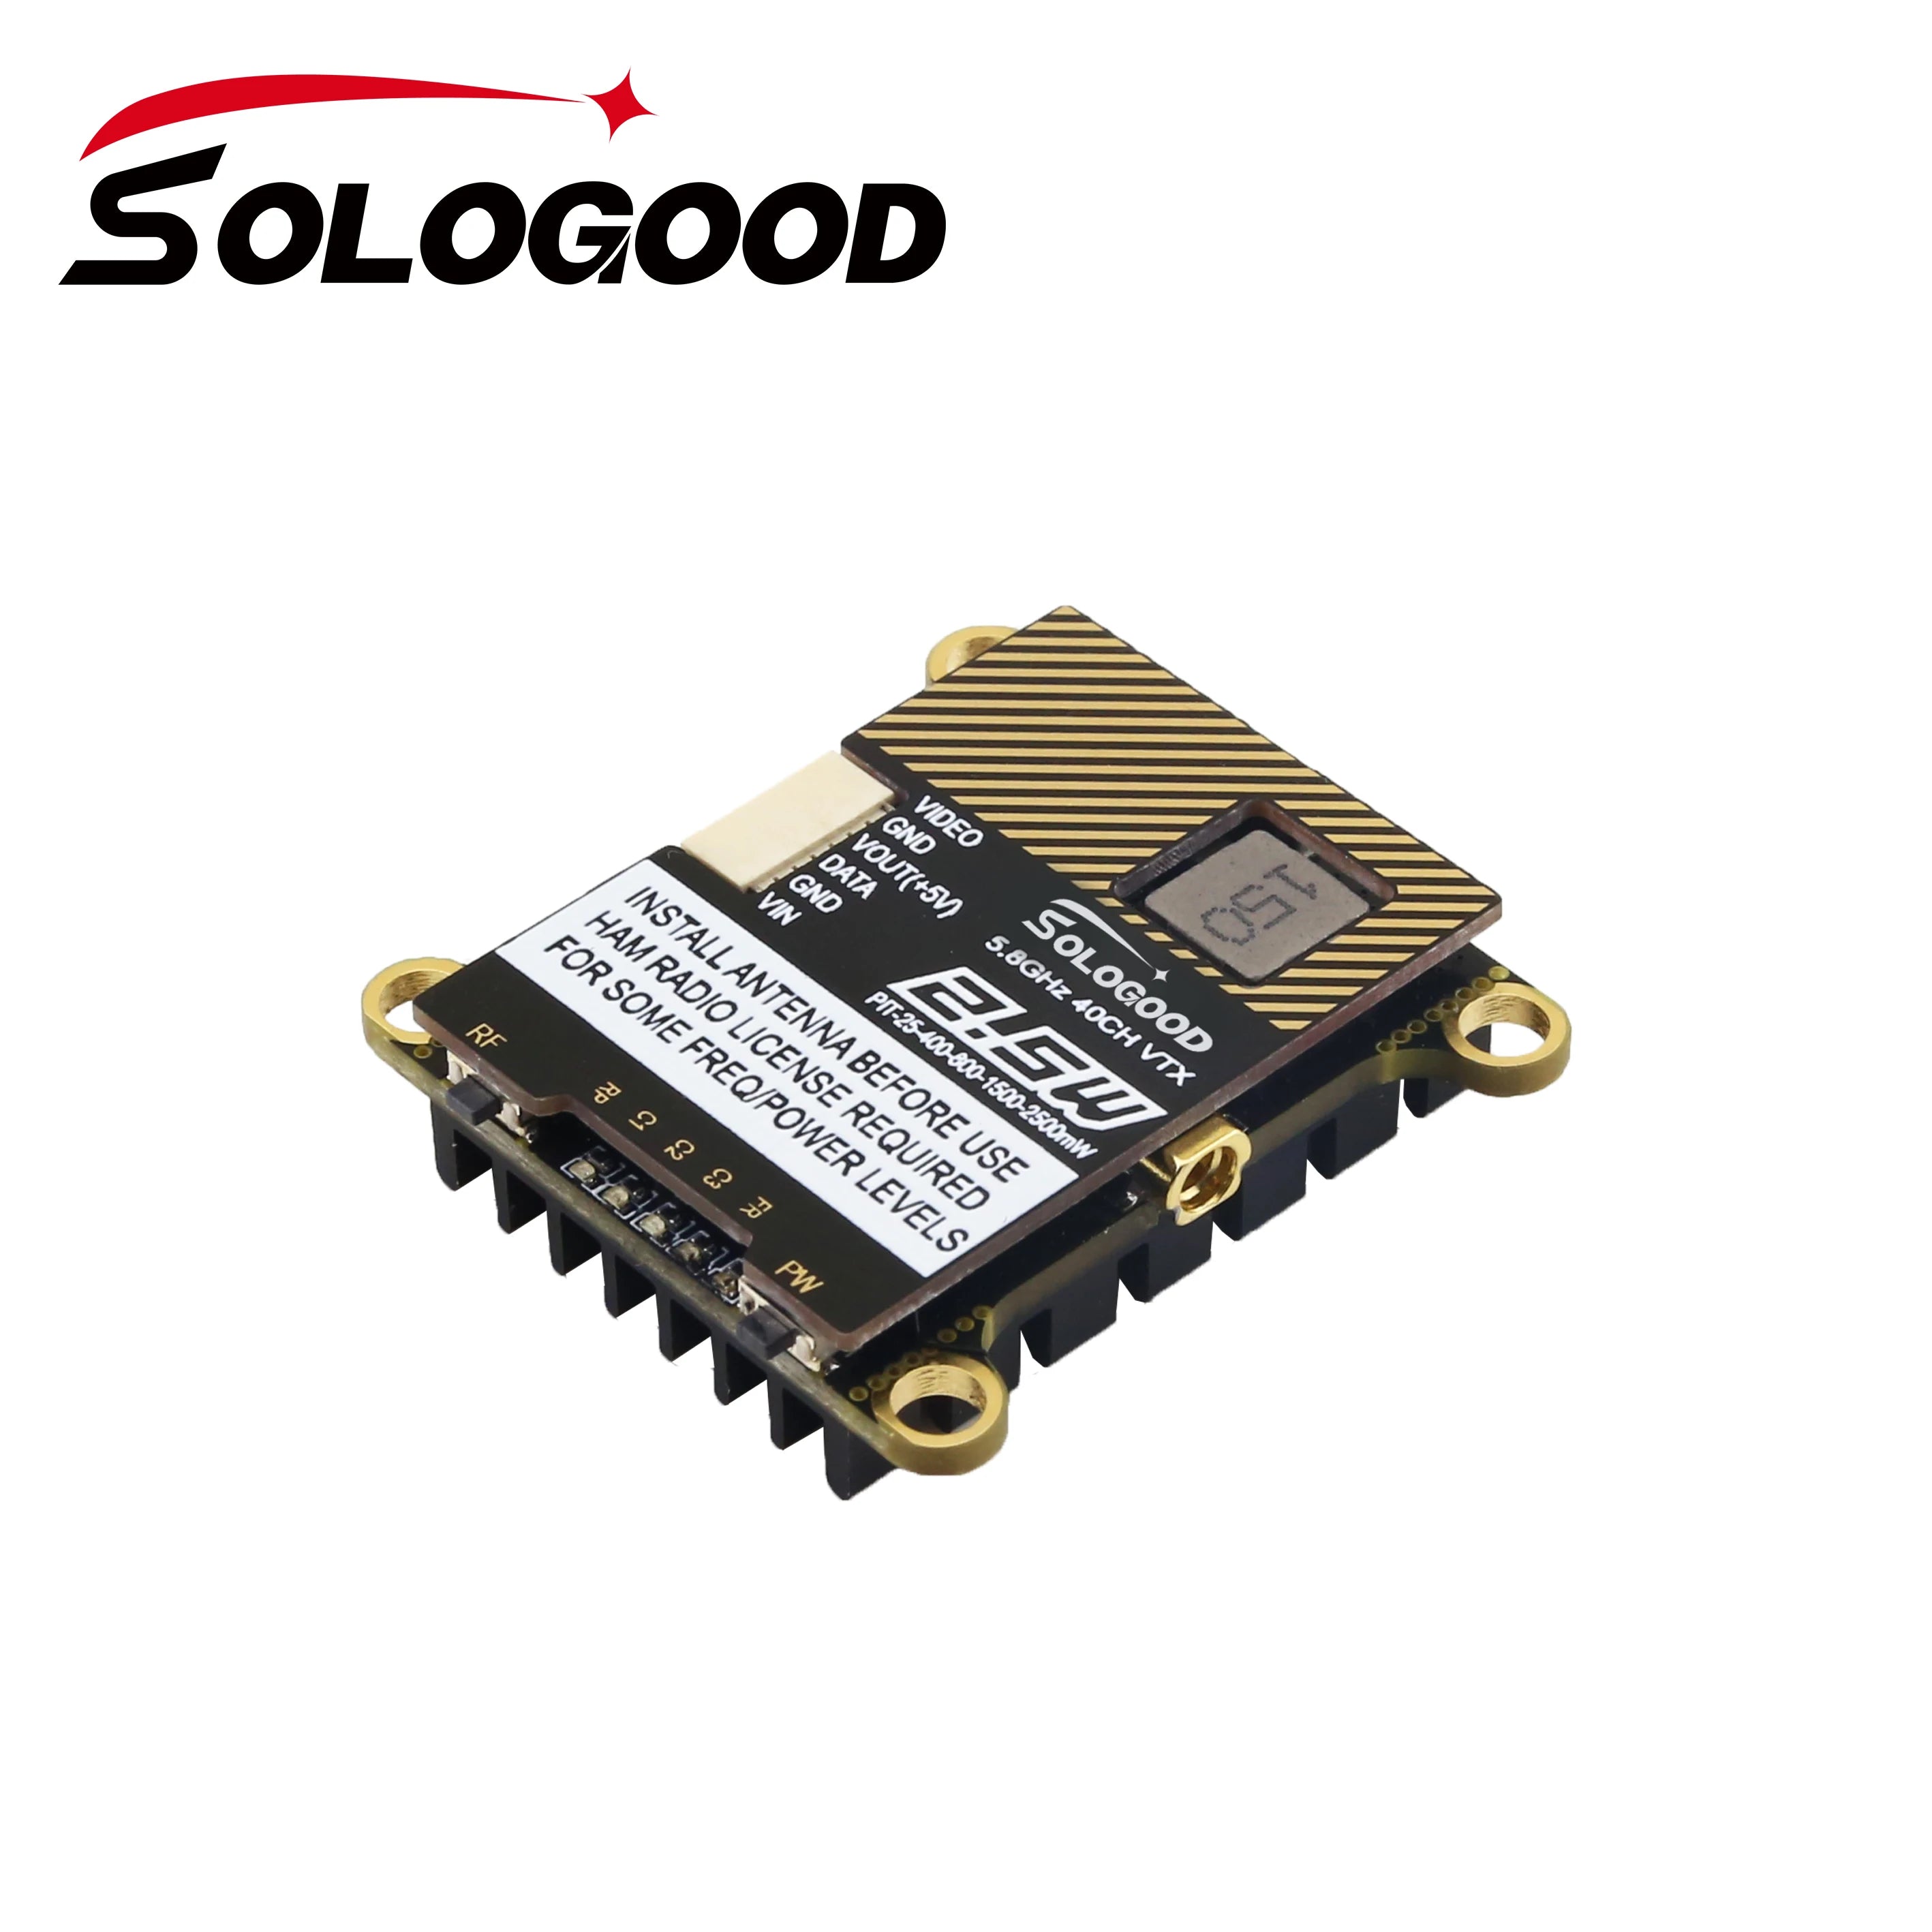 SoloGood 5.8G 2.5W 40CH VTX, HAMI SoLOGoop S.8GHz FOR _ 'RADIO ,